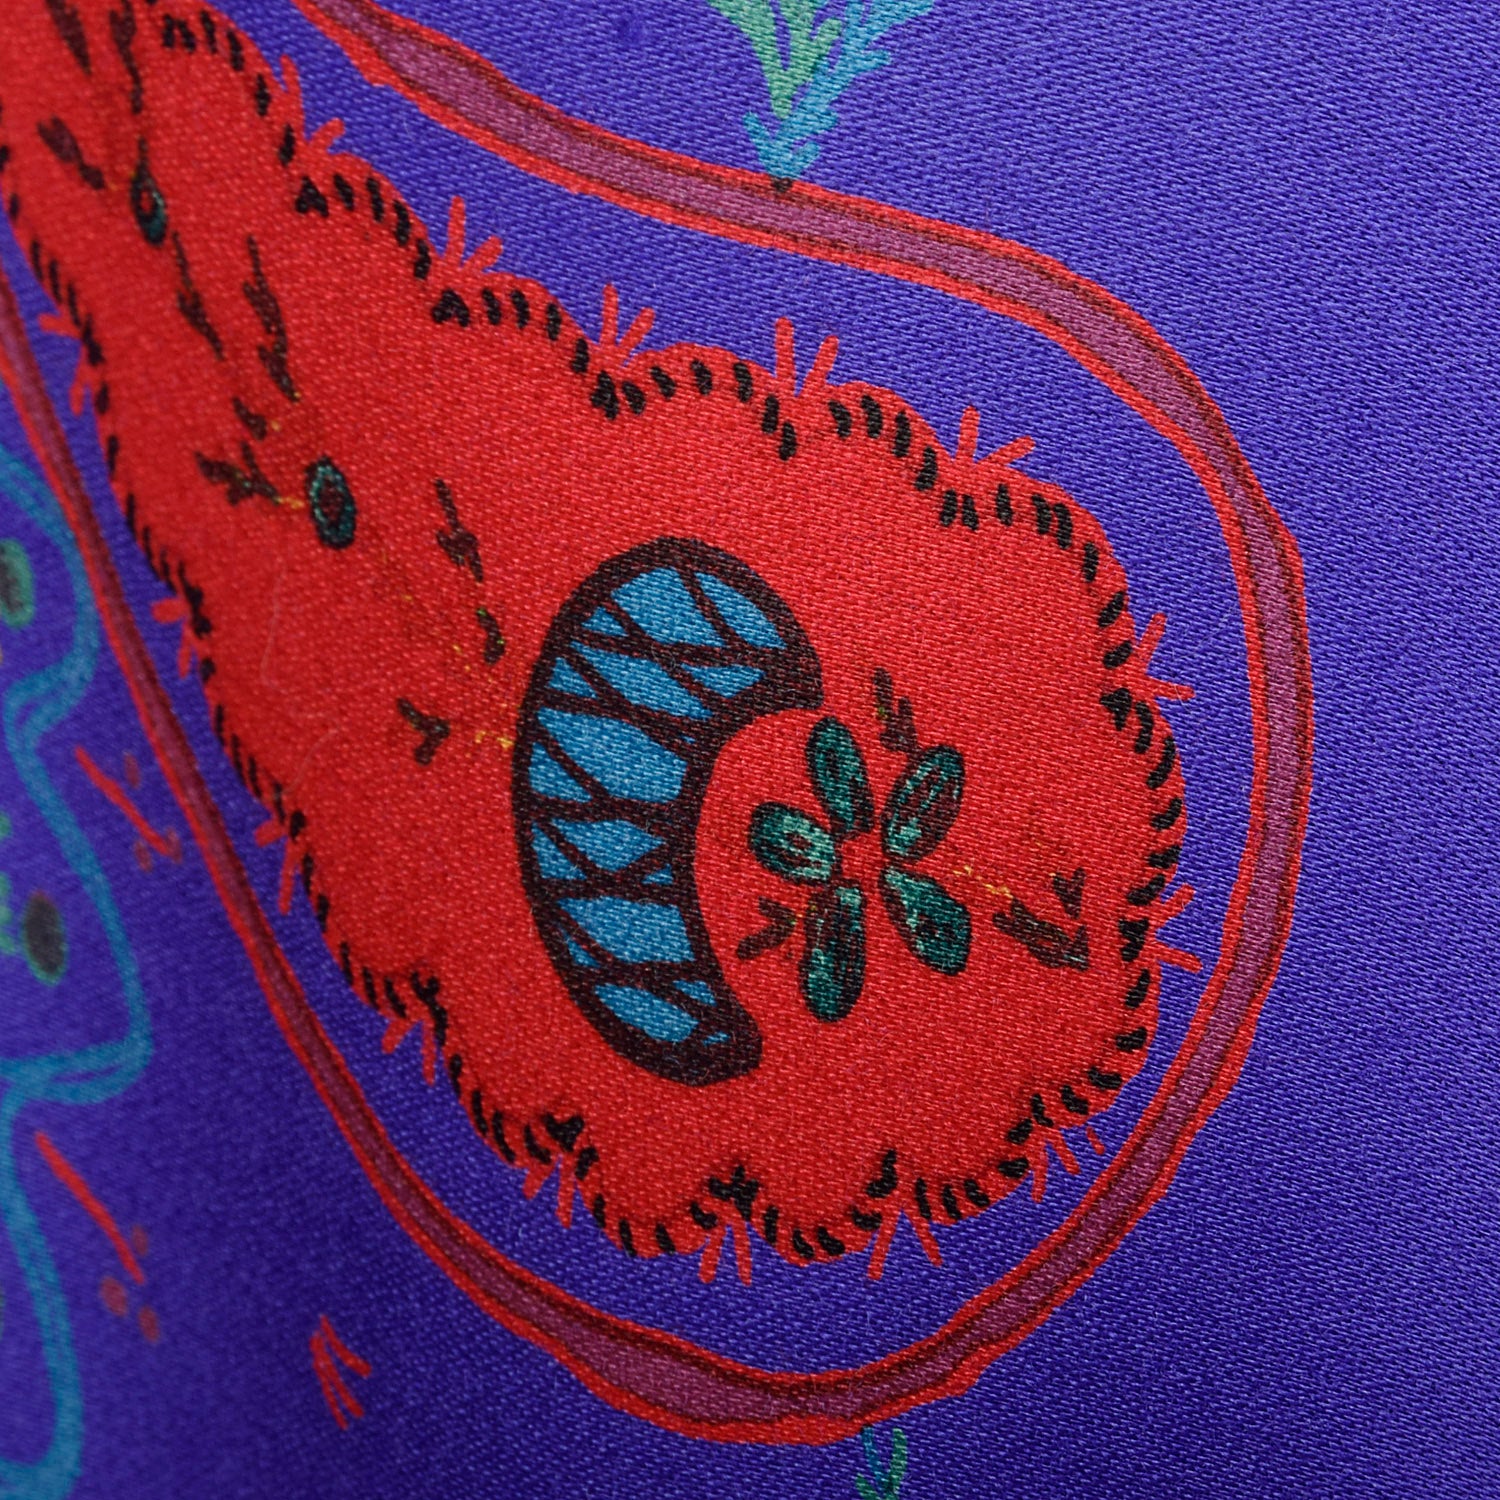 Emanuel Ungaro Paisley Print Purple Tapestry Shawl